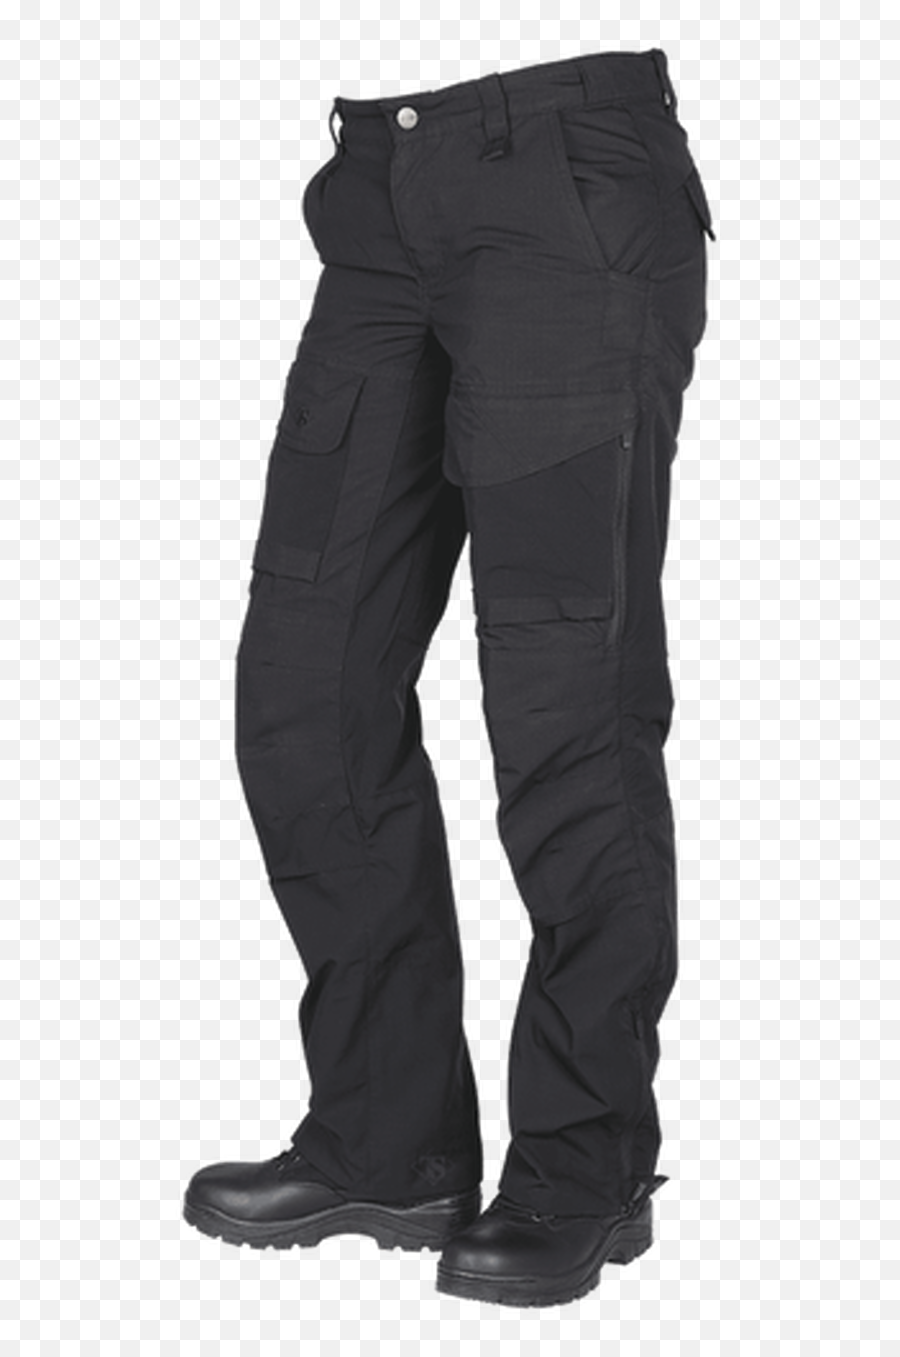 Uniform Cargo Pants - Trousers Emoji,Boot Cuffs & Emoji